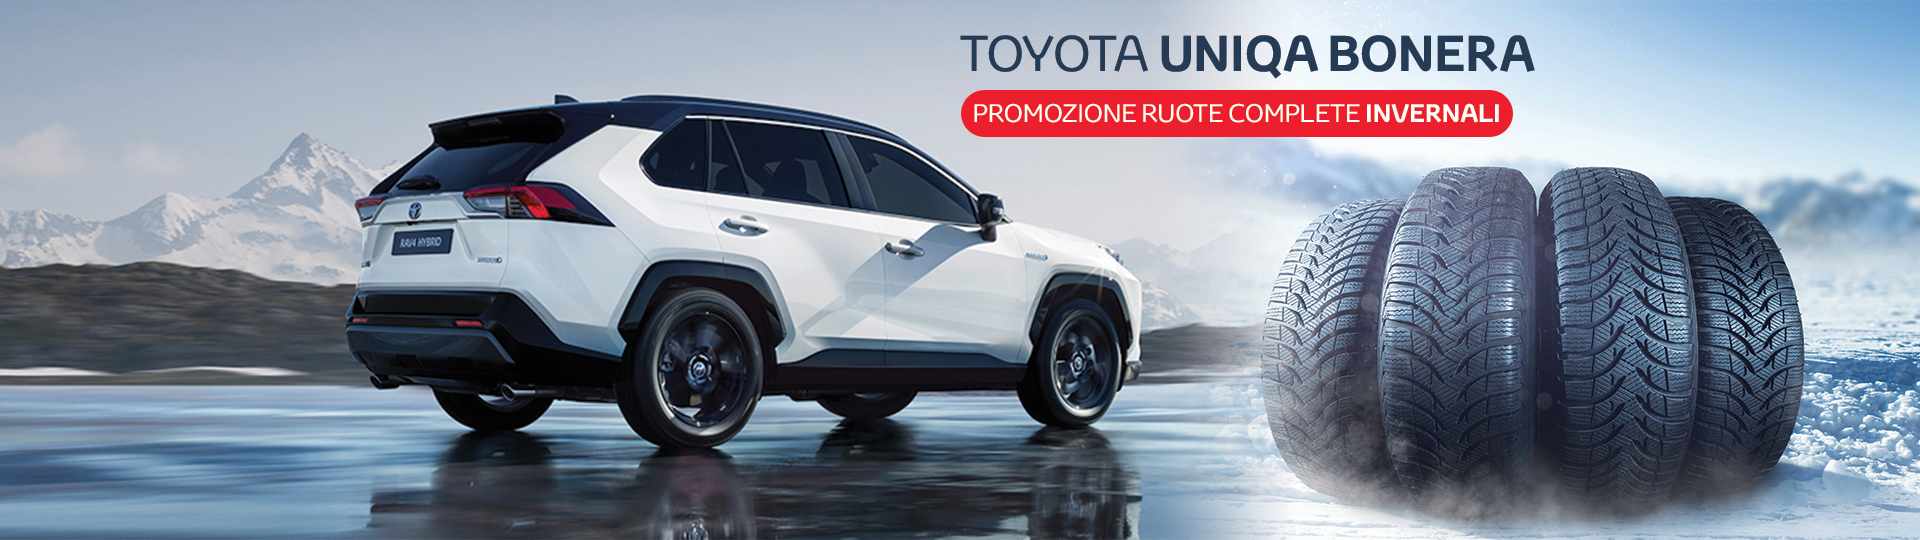 Header_Toyota_Ruote_Complete_Invernali_Ottobre_2020.jpg